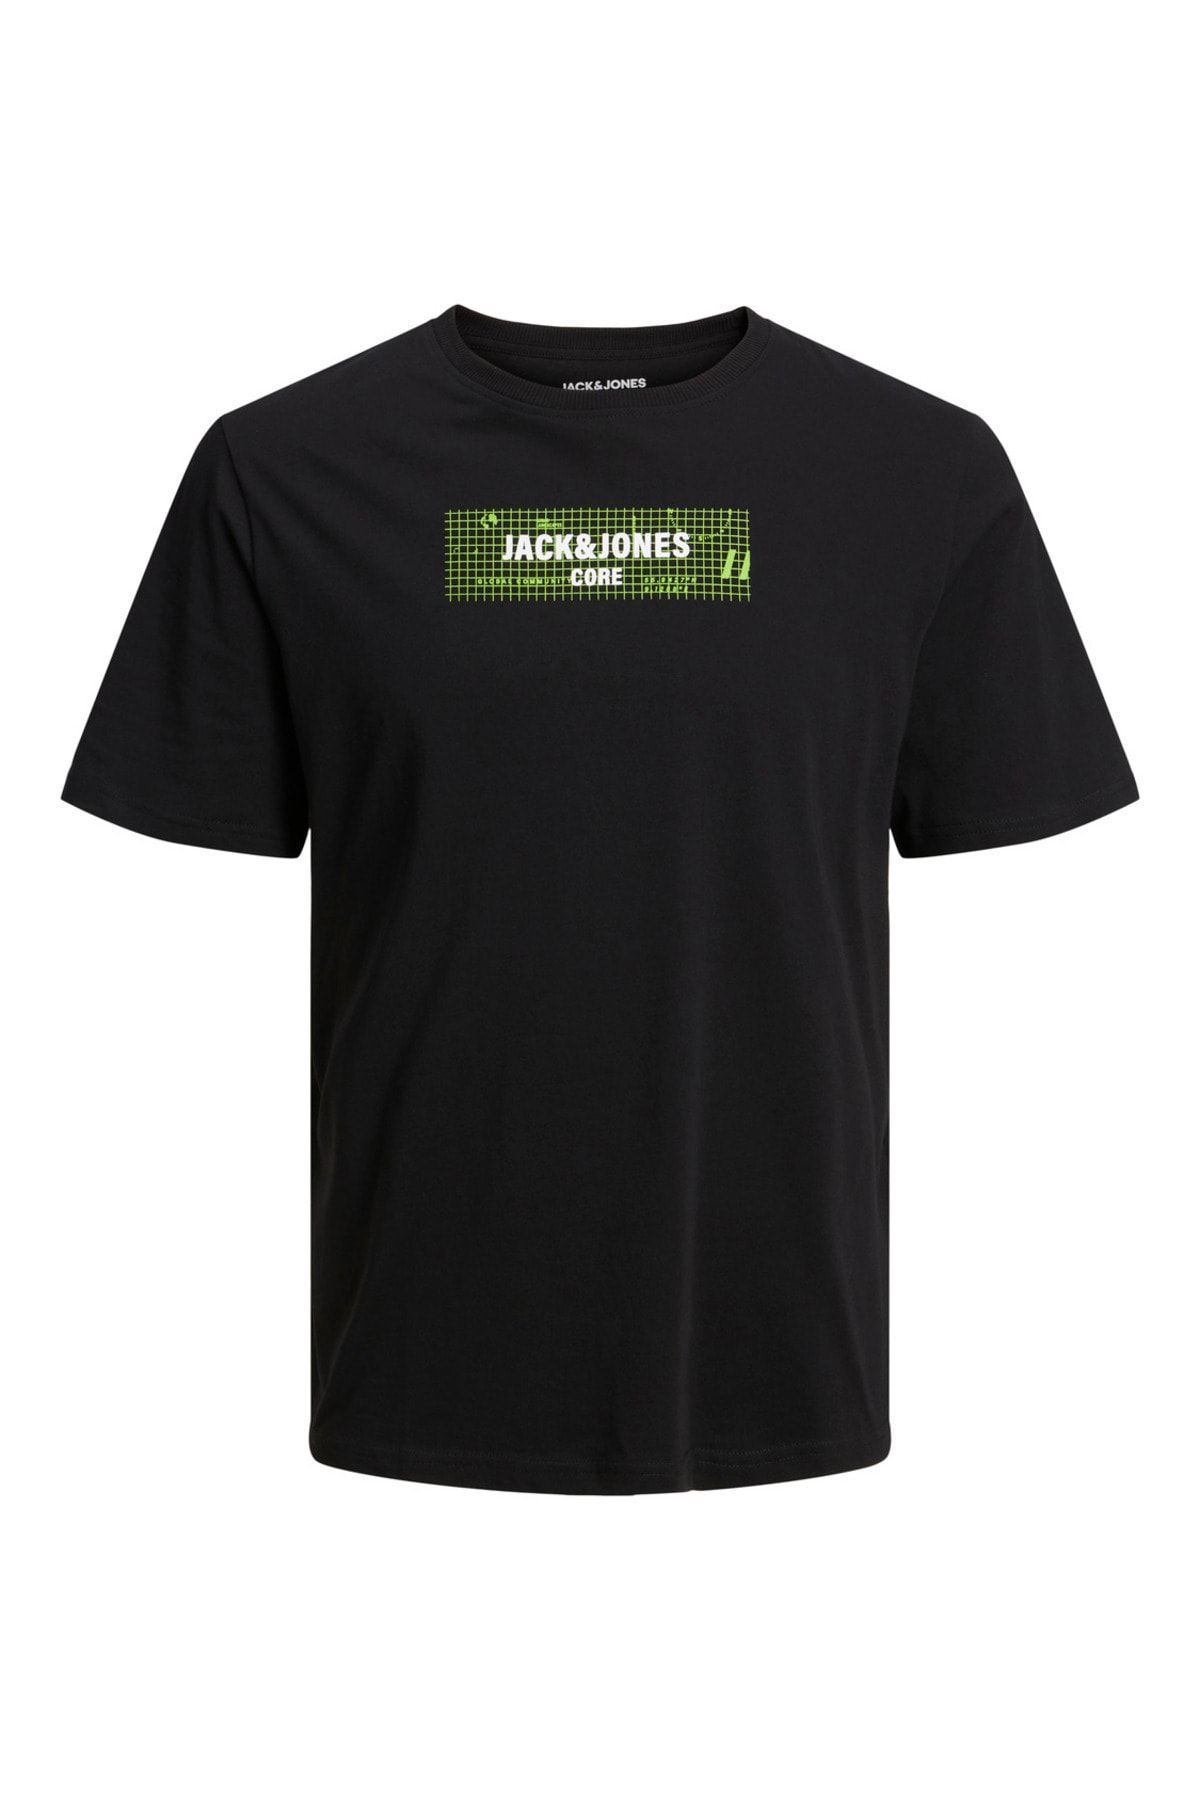 Jack & Jones تی شرت چاپ سینه لوگو - دیده نشده